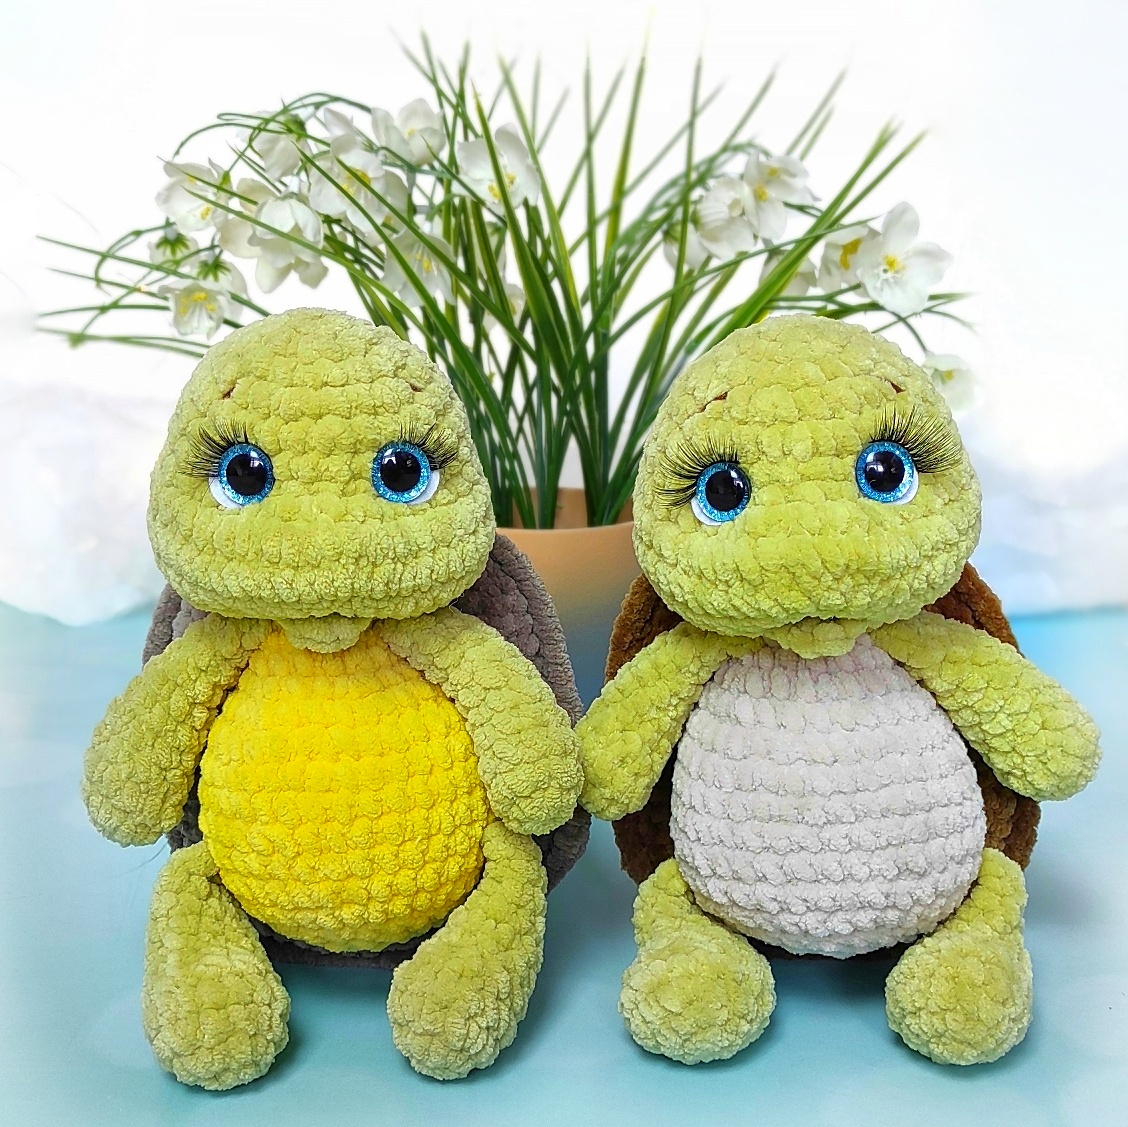 Turtle crochet pattern, amigurumi pattern, plush turtle, PDF